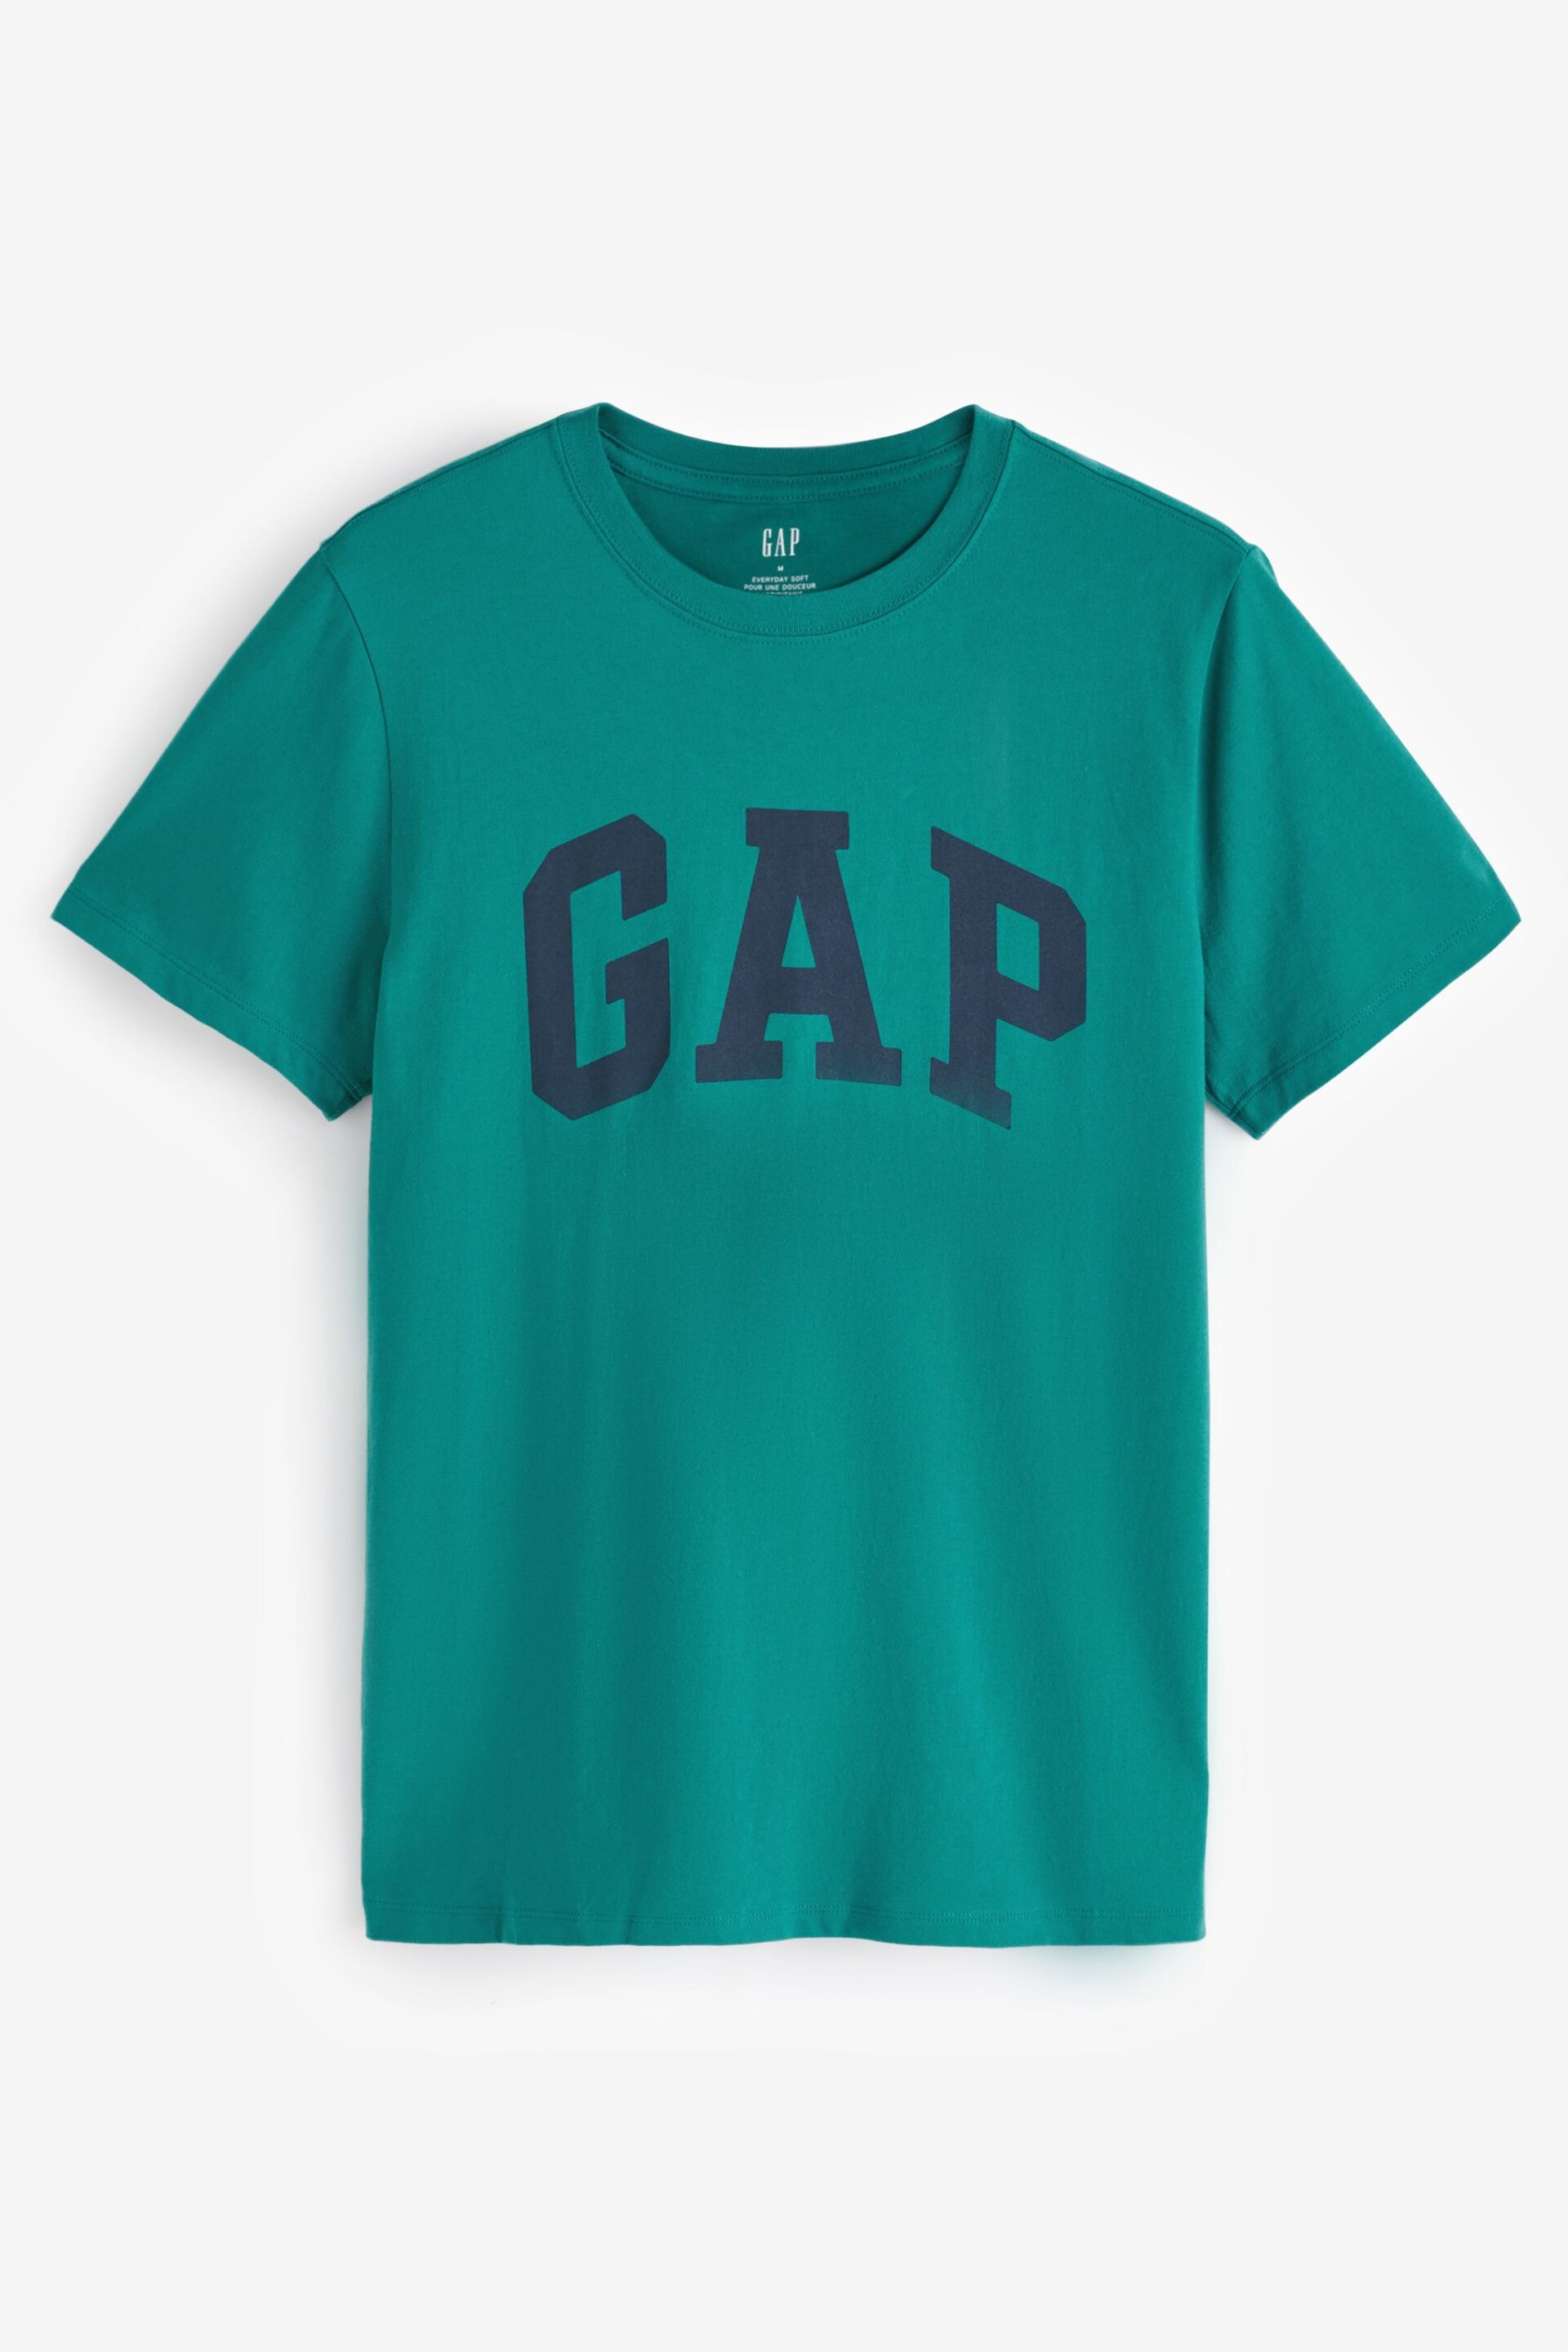 Gap Green Everyday Soft Logo Short Sleeve Crew Neck T-Shirt - Image 2 of 4